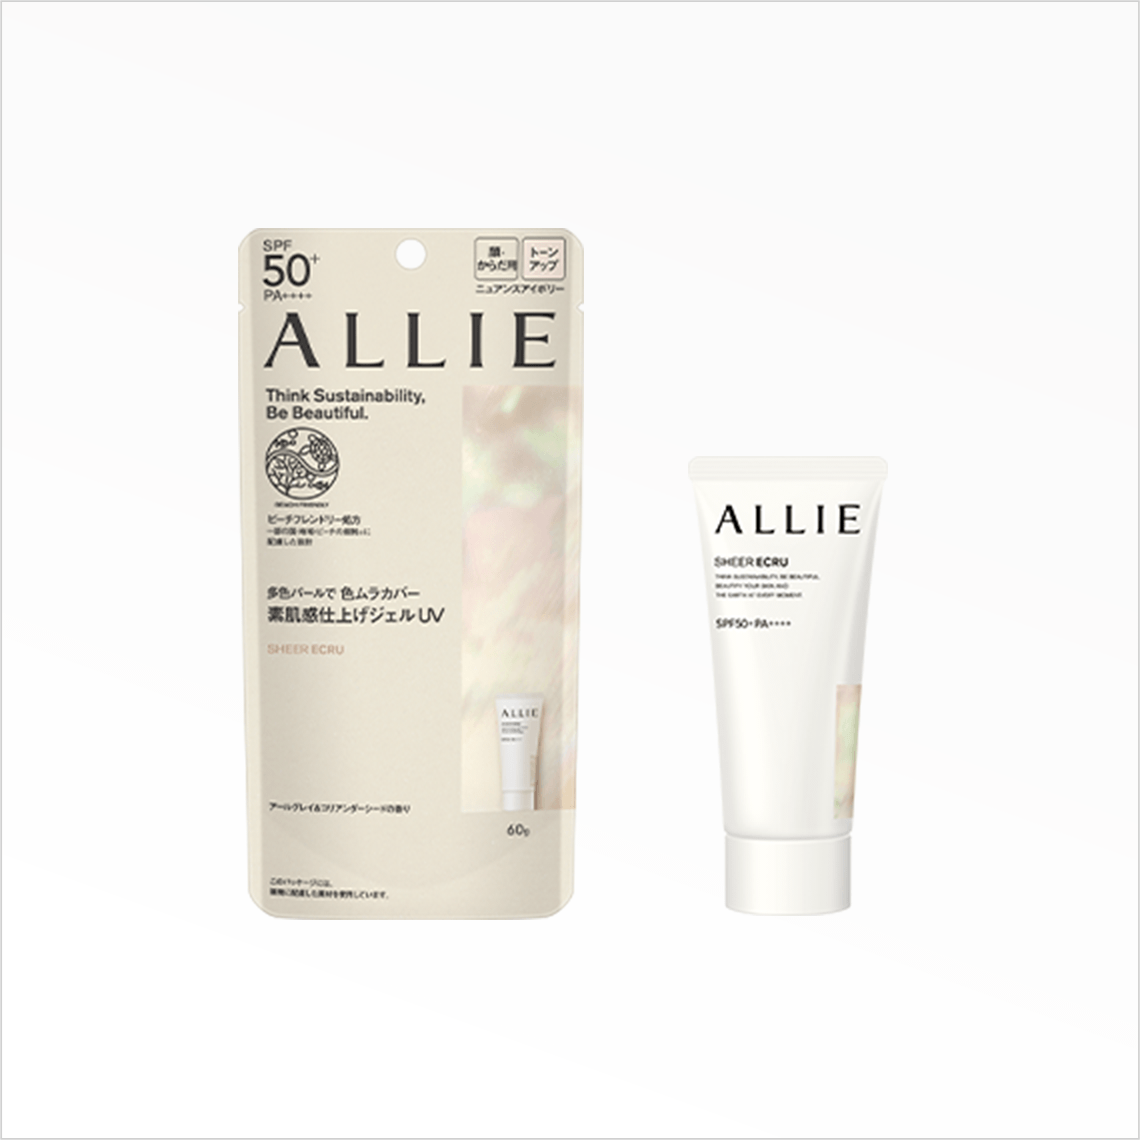 Allie Chrono Beauty Milk UV EX 60g 嘉娜宝 Kanebo ALLIE 防水防汗超强环保防晒乳液EX SPF50+ PA++++ 60g - MOMO E-Store